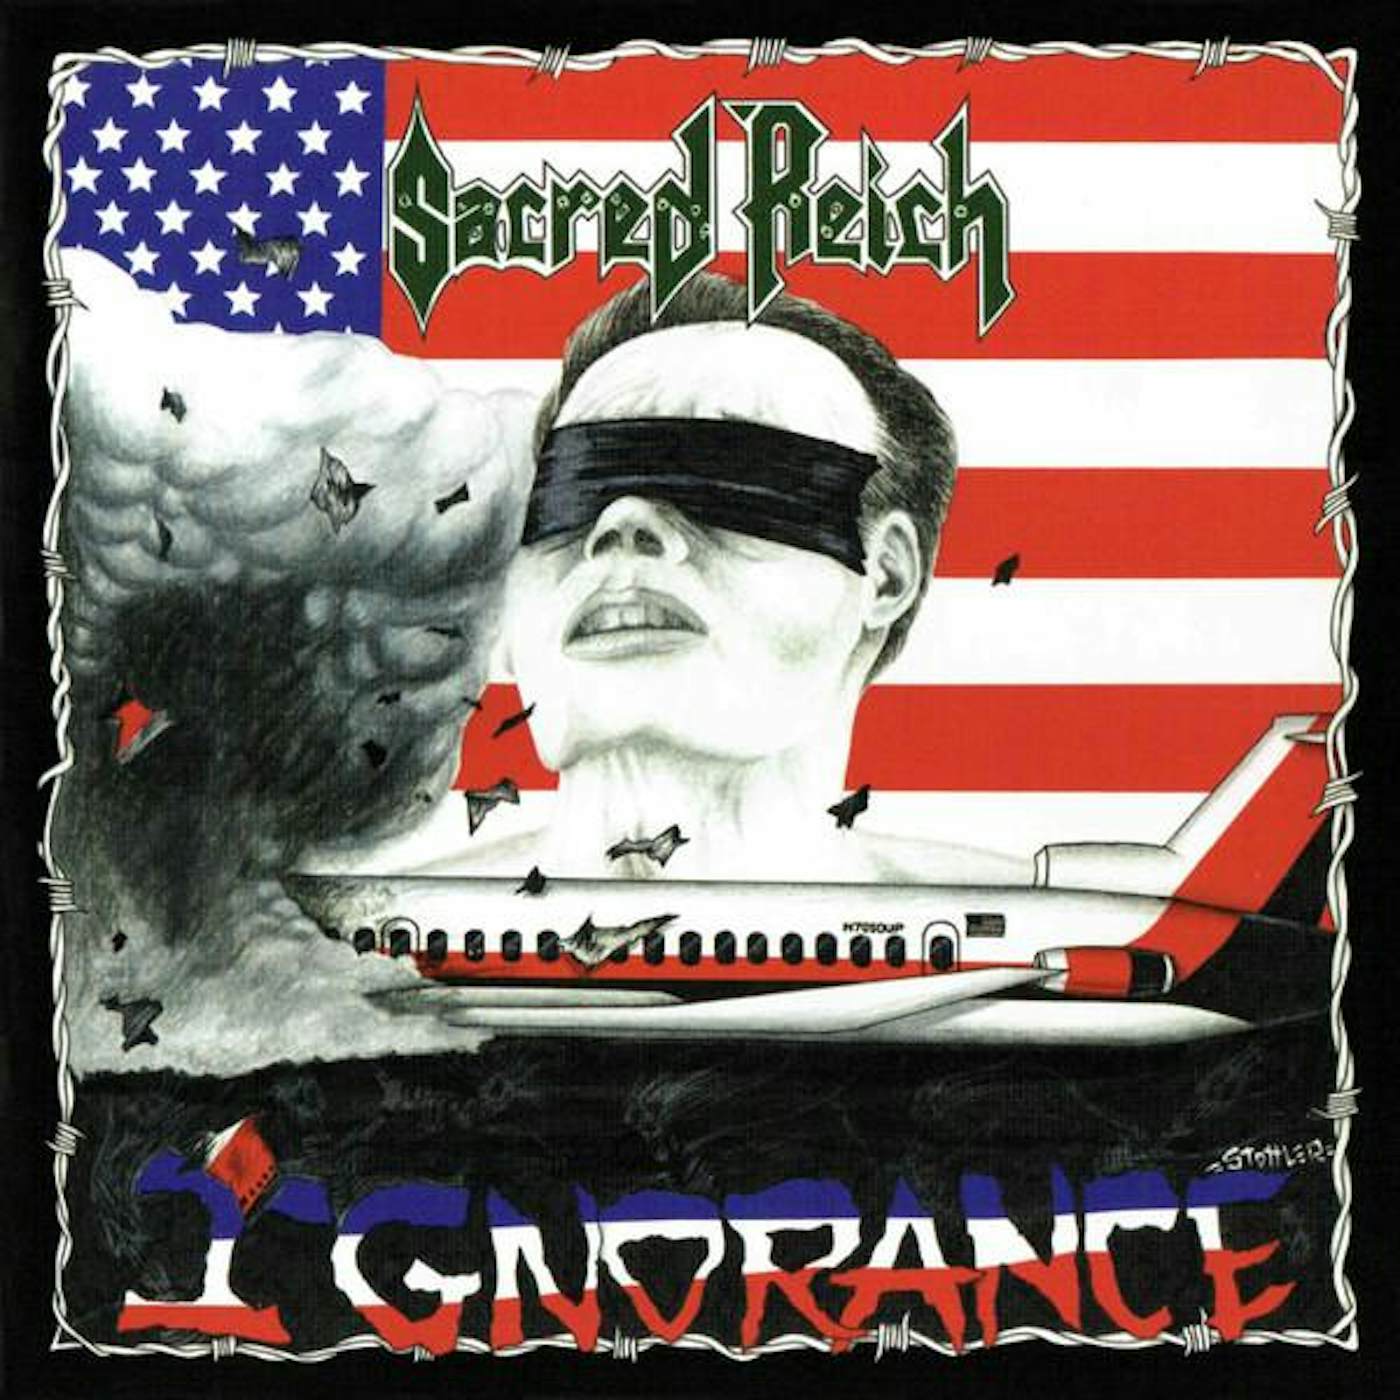 Sacred Reich IGNORANCE CD